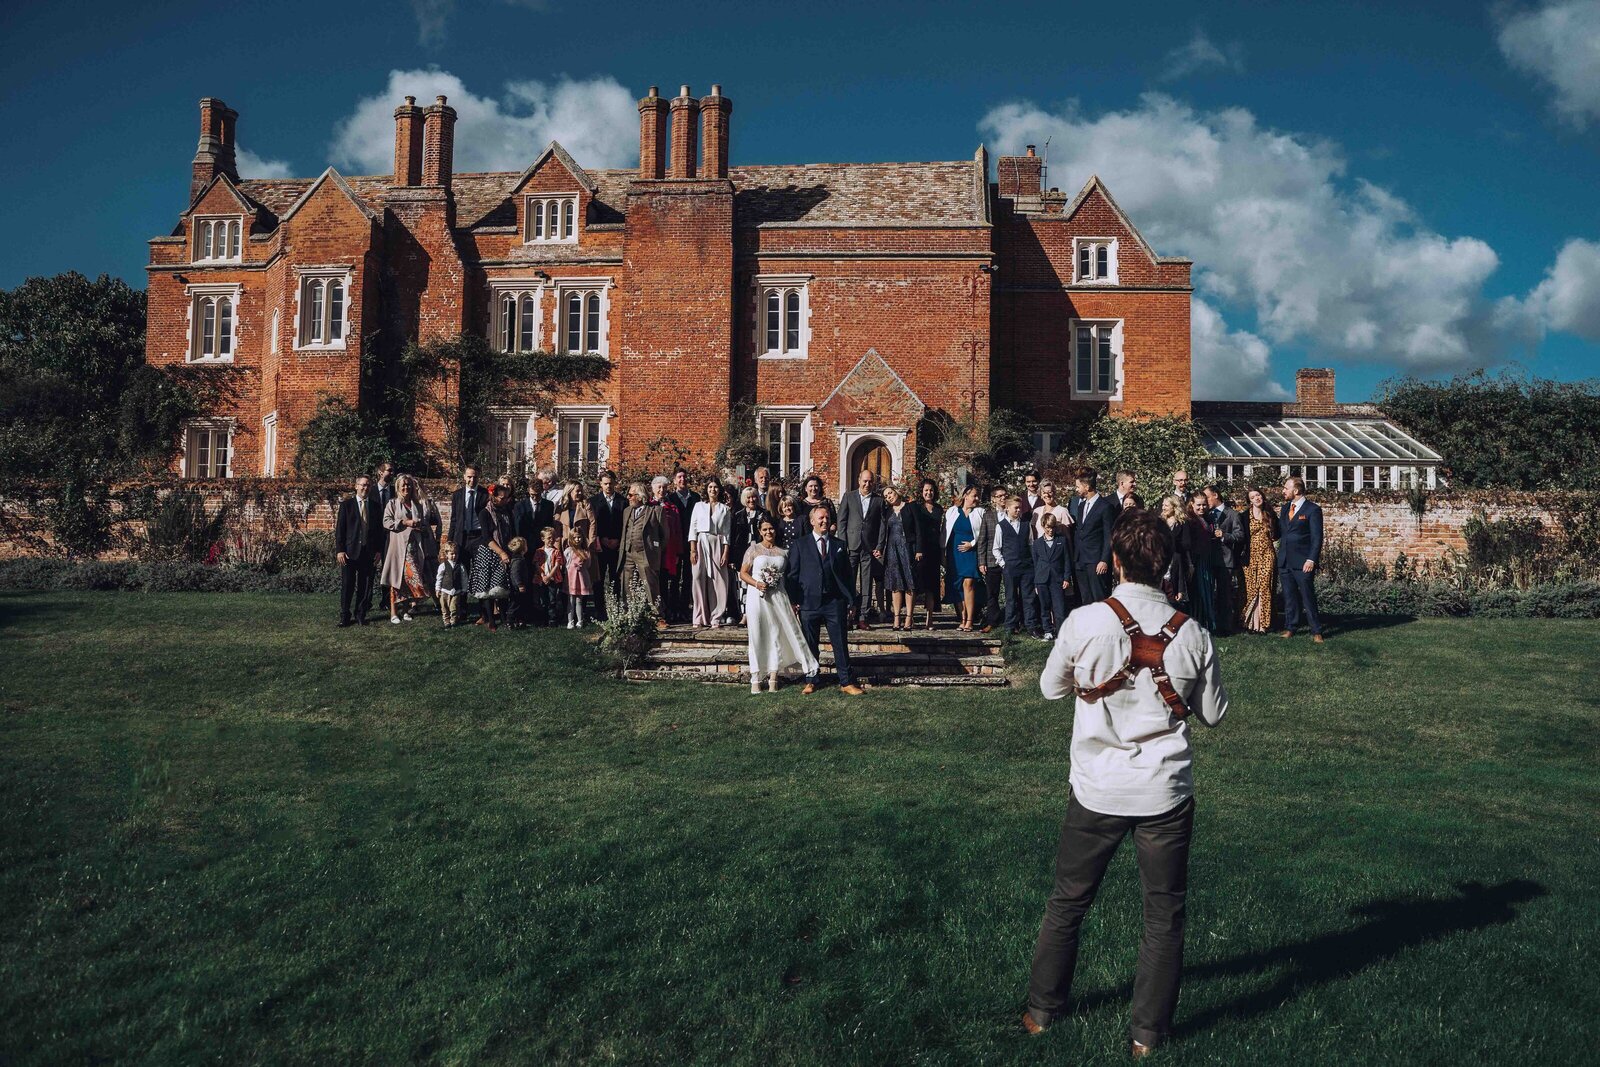 Tom Keenan the photographer setting up a big group shot at Childerley wedding venue